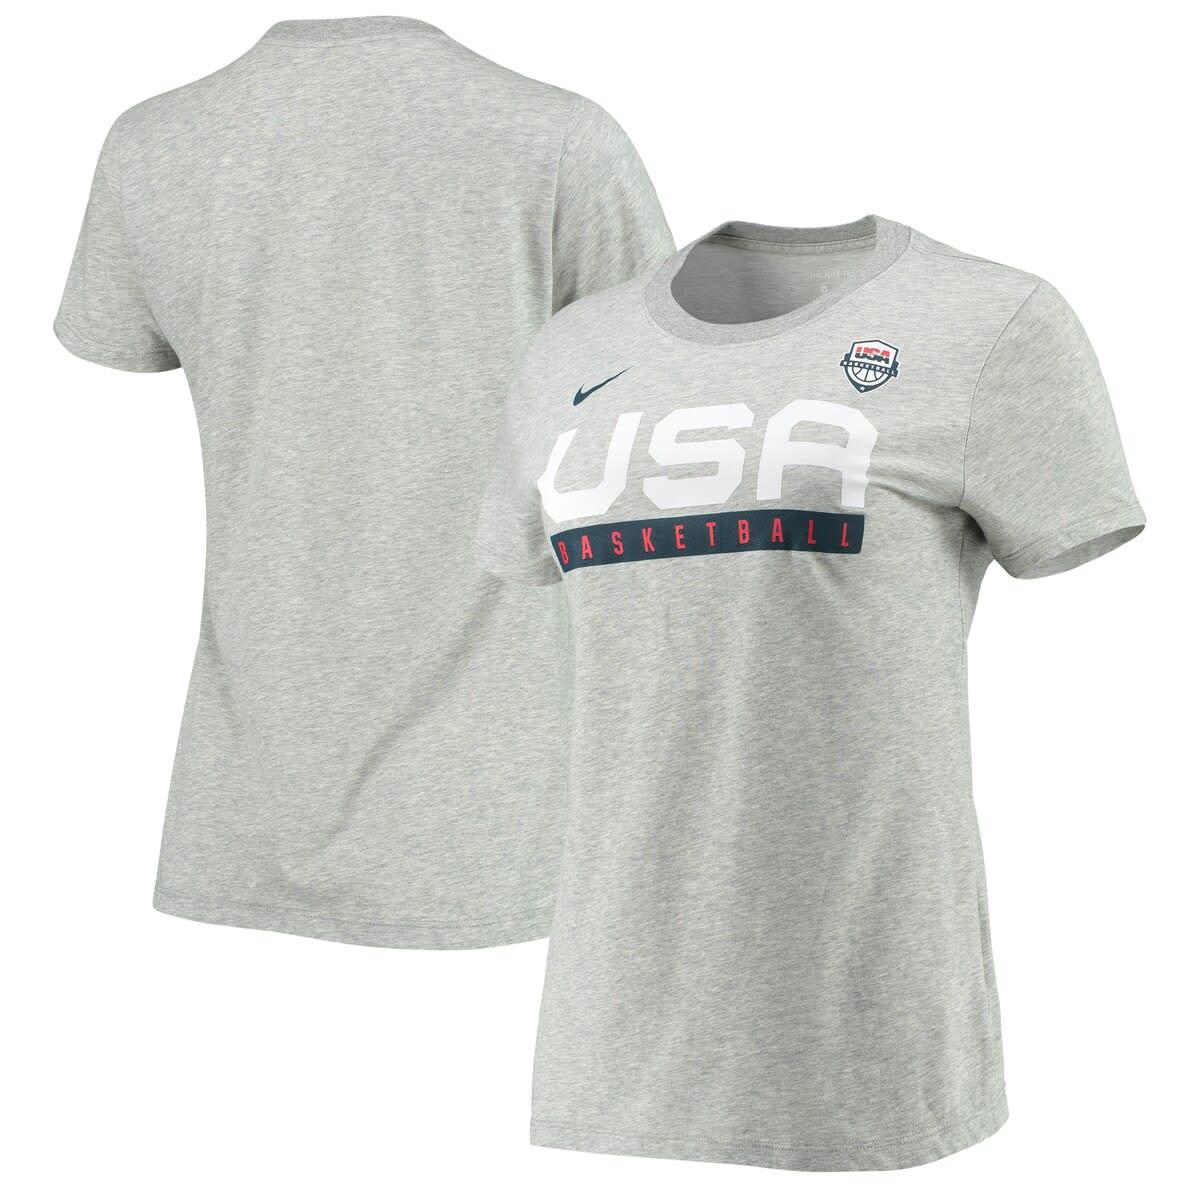 Nike Heathered Gray Usa Basketball Performance T-shirt | Lyst